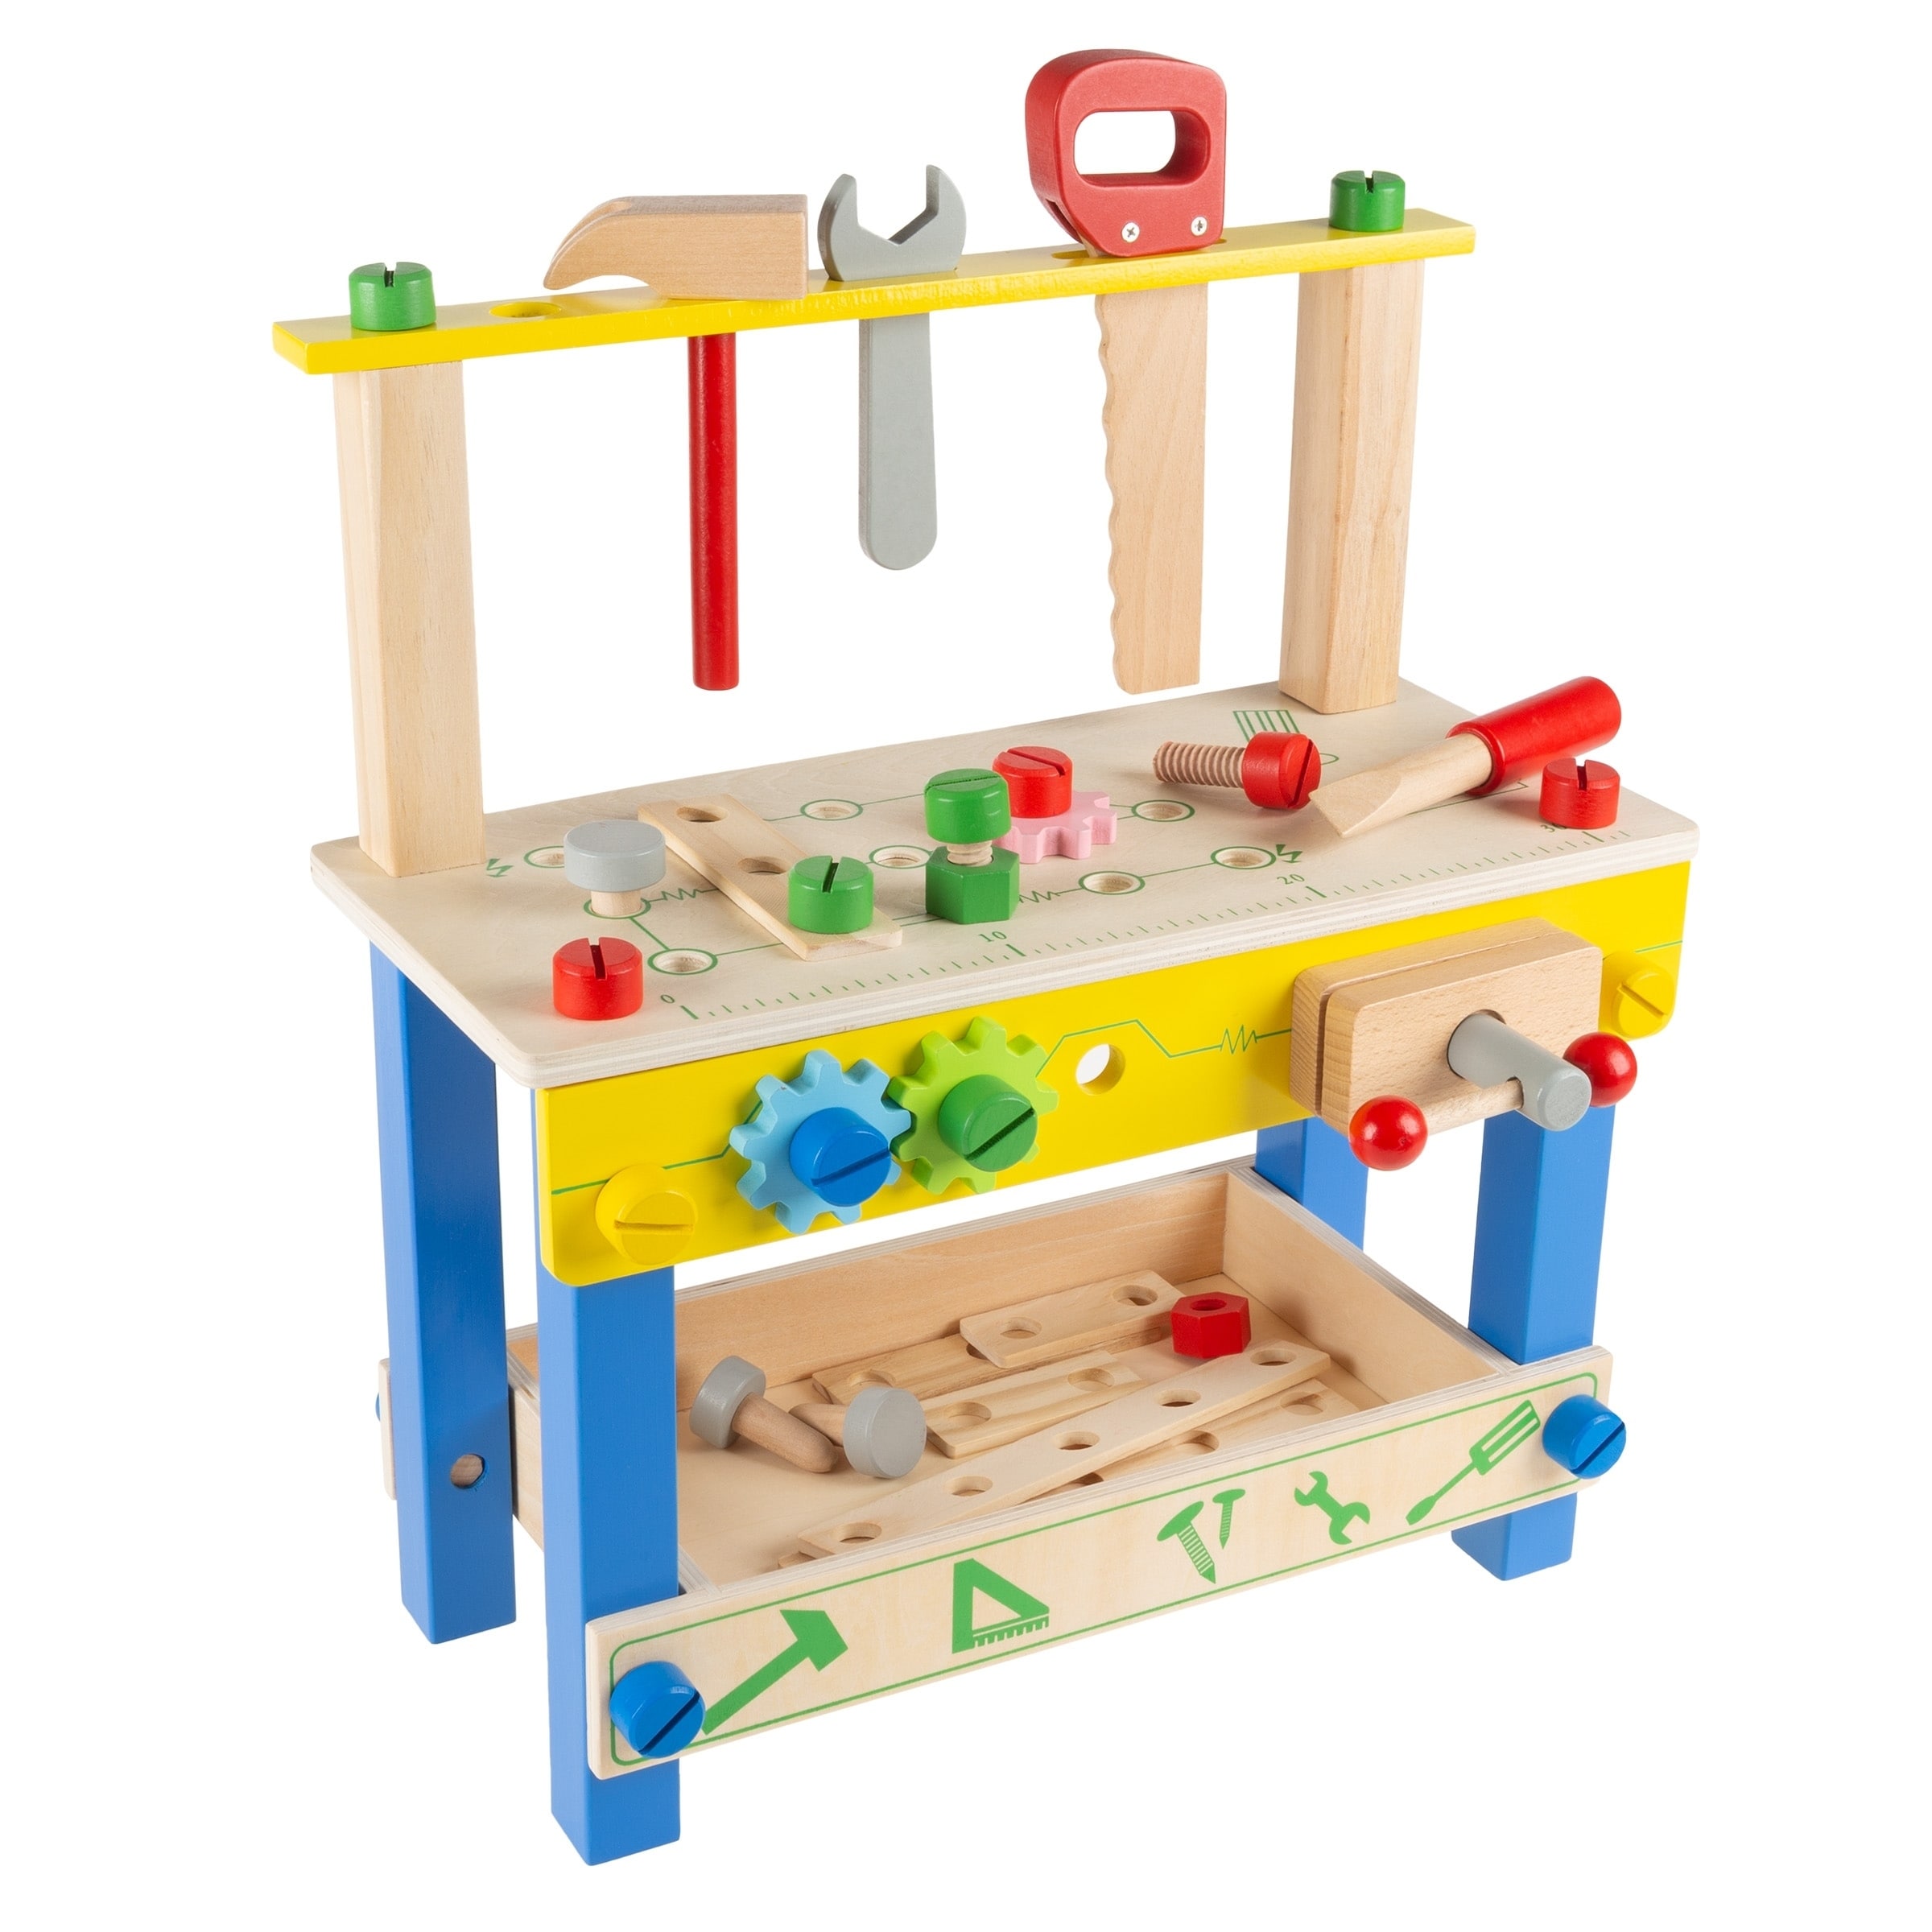 wooden toy workbench